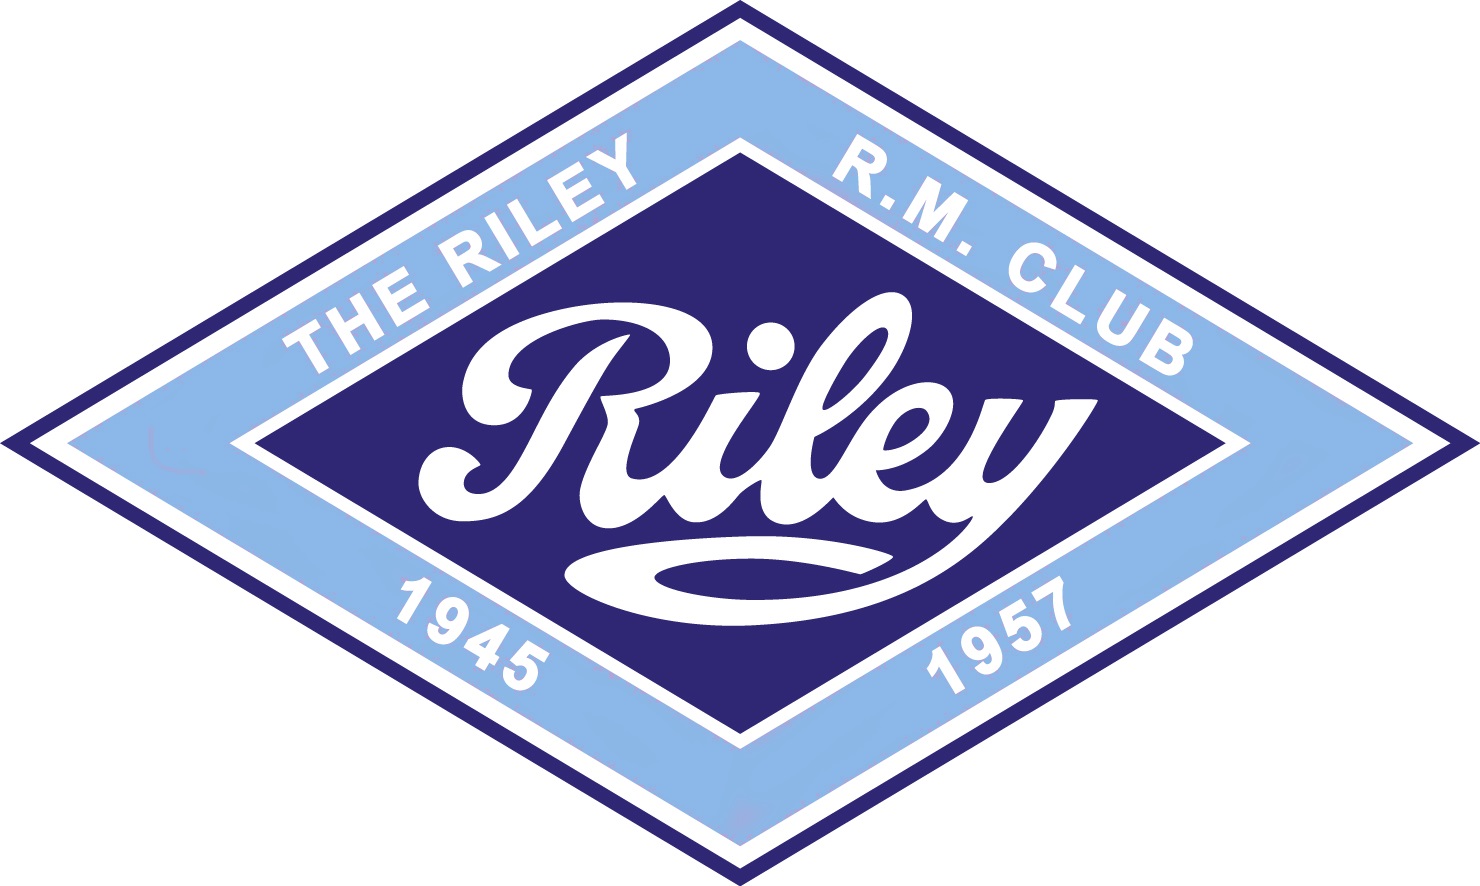 The Riley RM